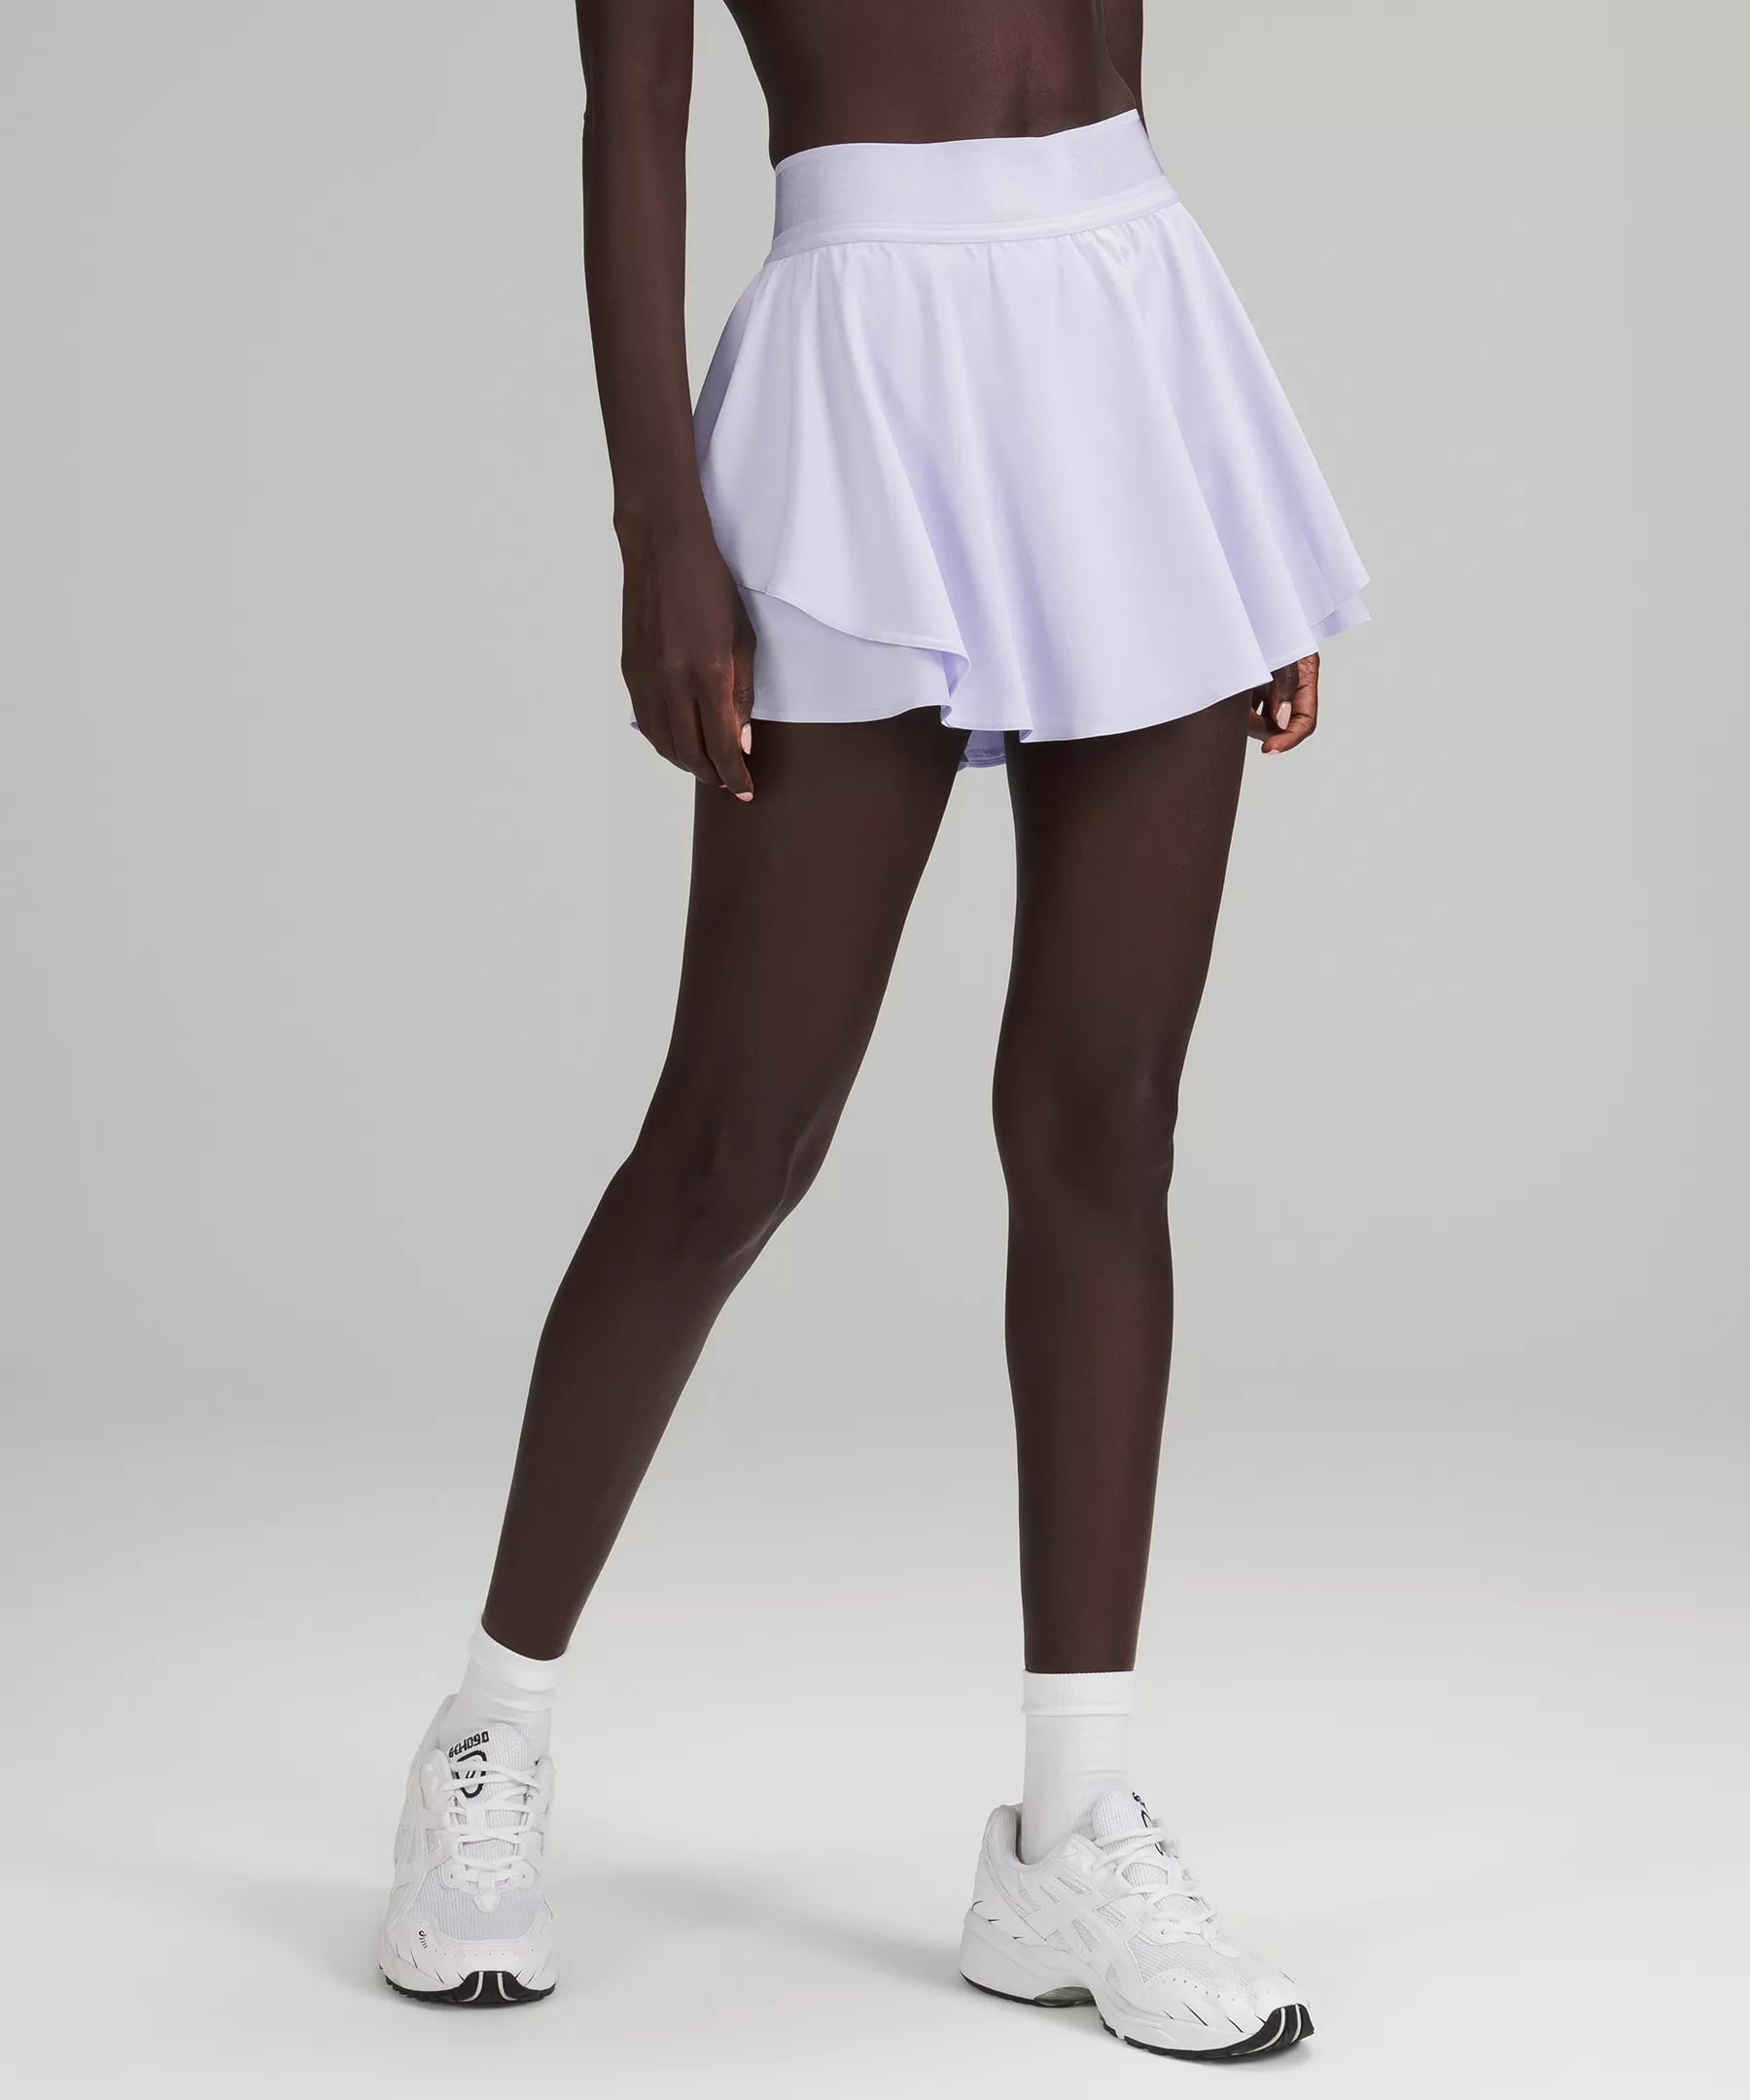 Best Tennis Skirts For Women